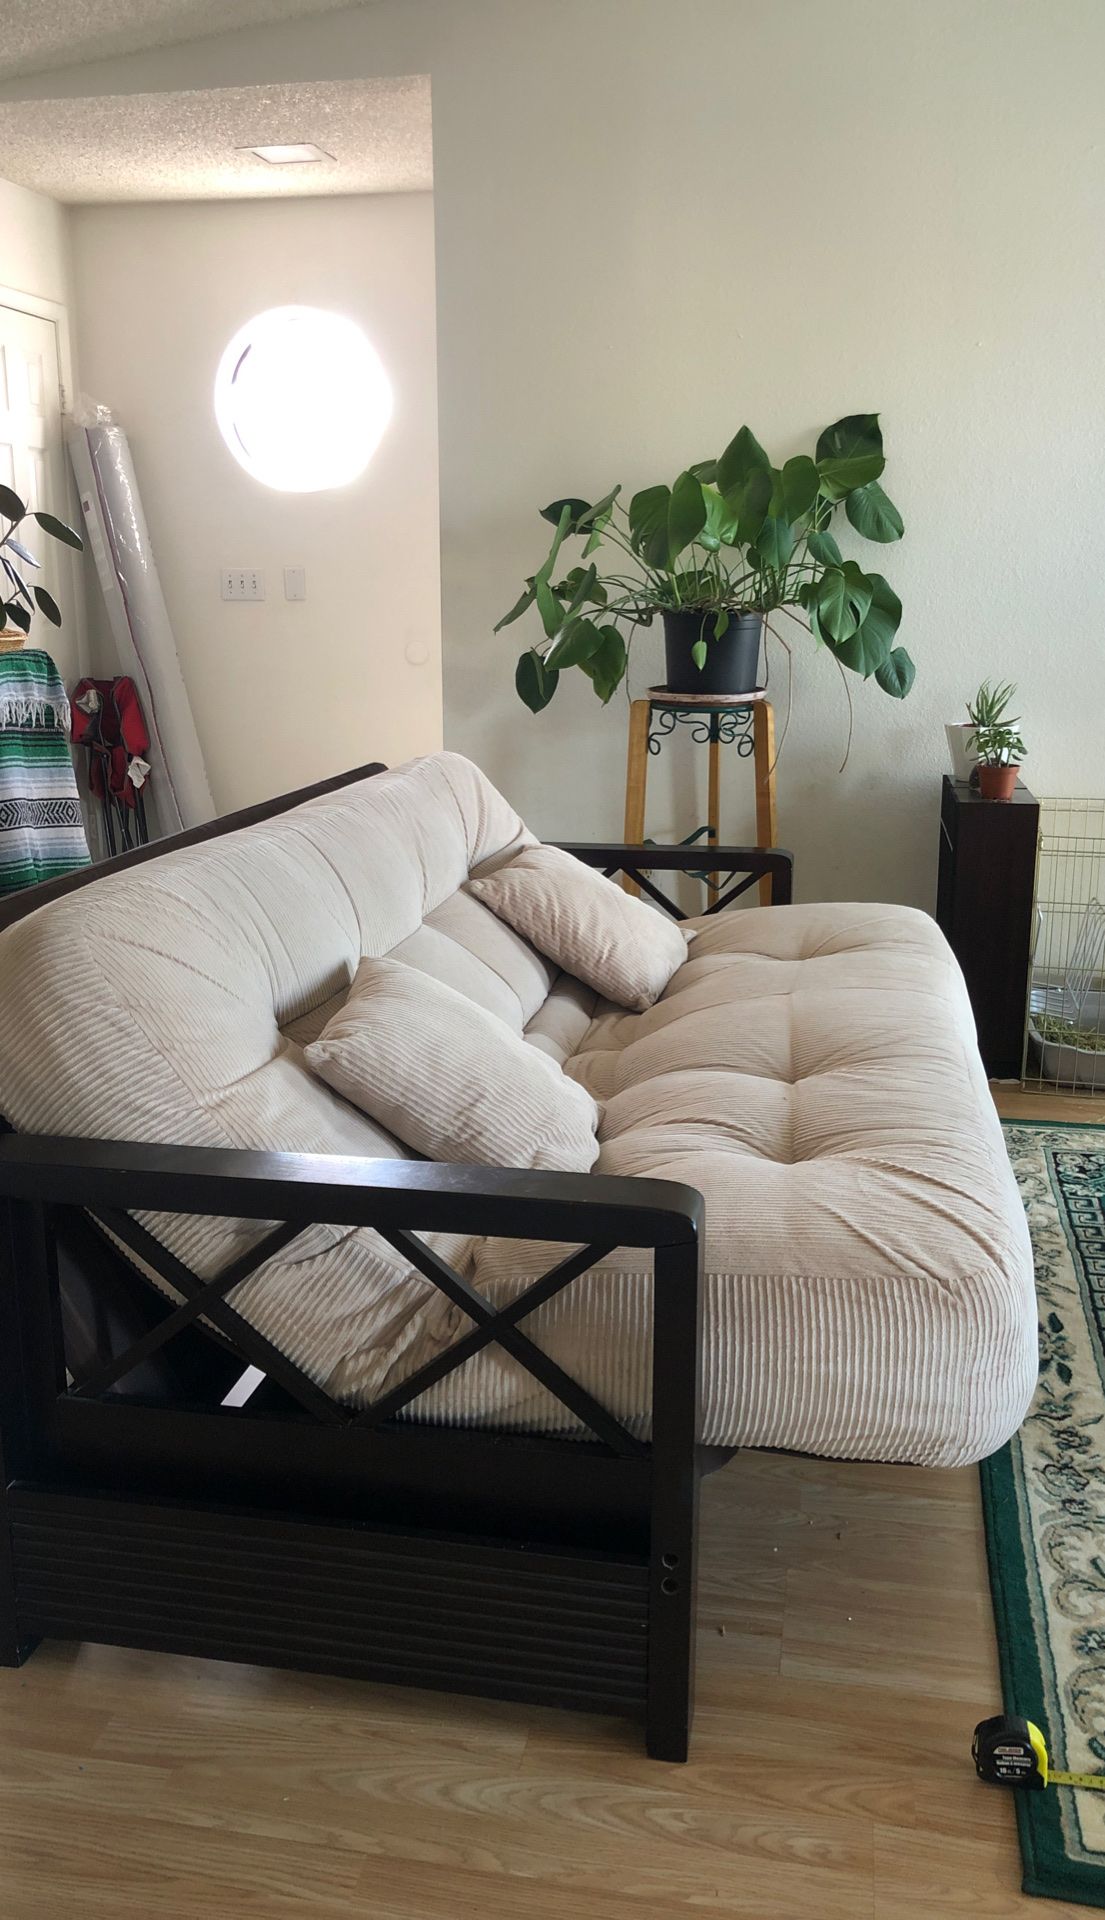 Cream color Couch bed futon